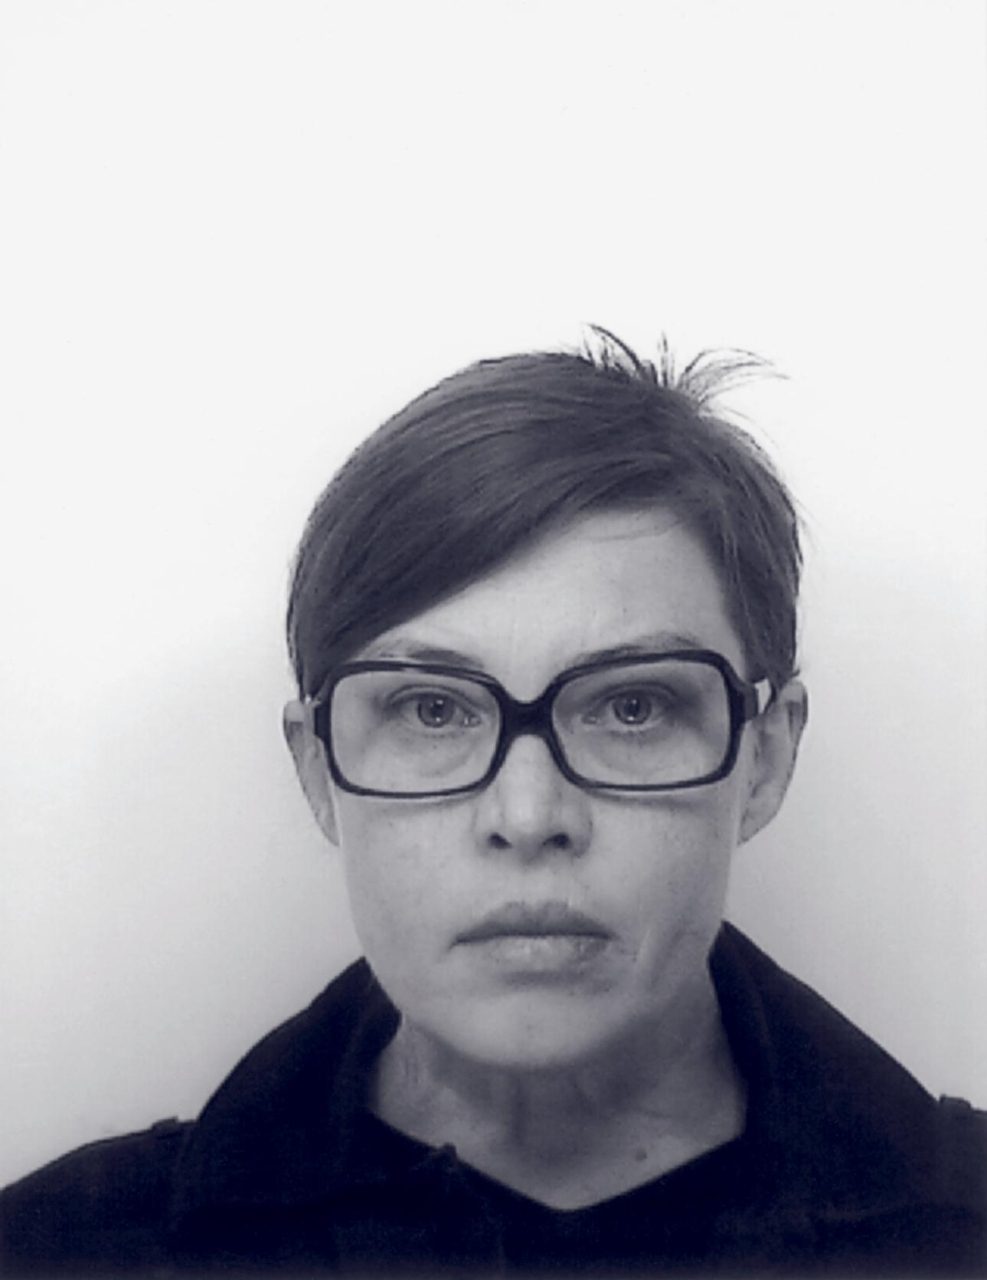 headshot of Cosima von Bonin in black and white